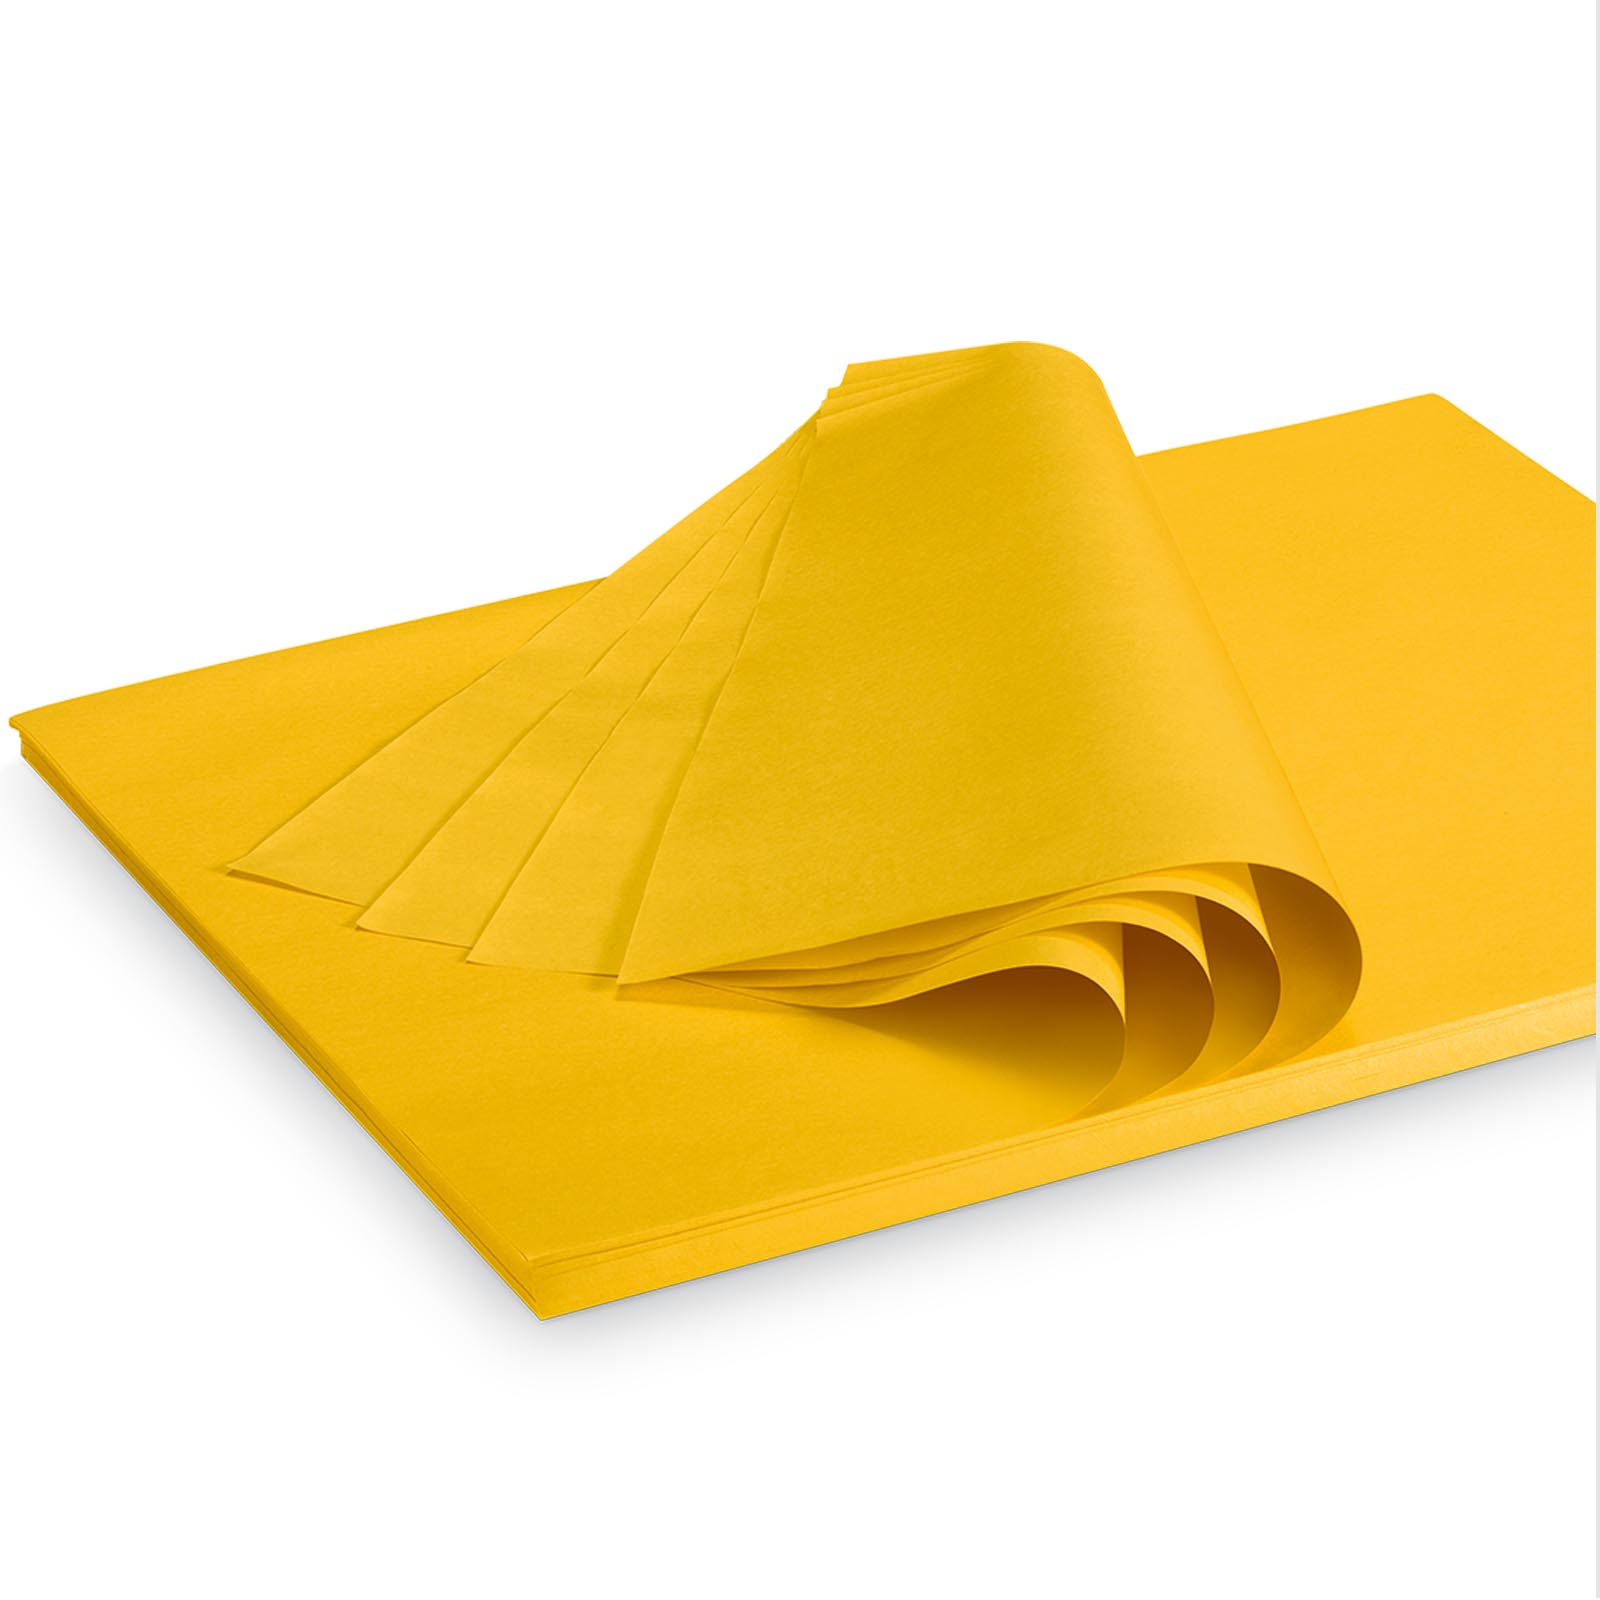 Seidenpapier 375x500mm gelb 35g/m²,300 Bogen/ Karton = 2kg